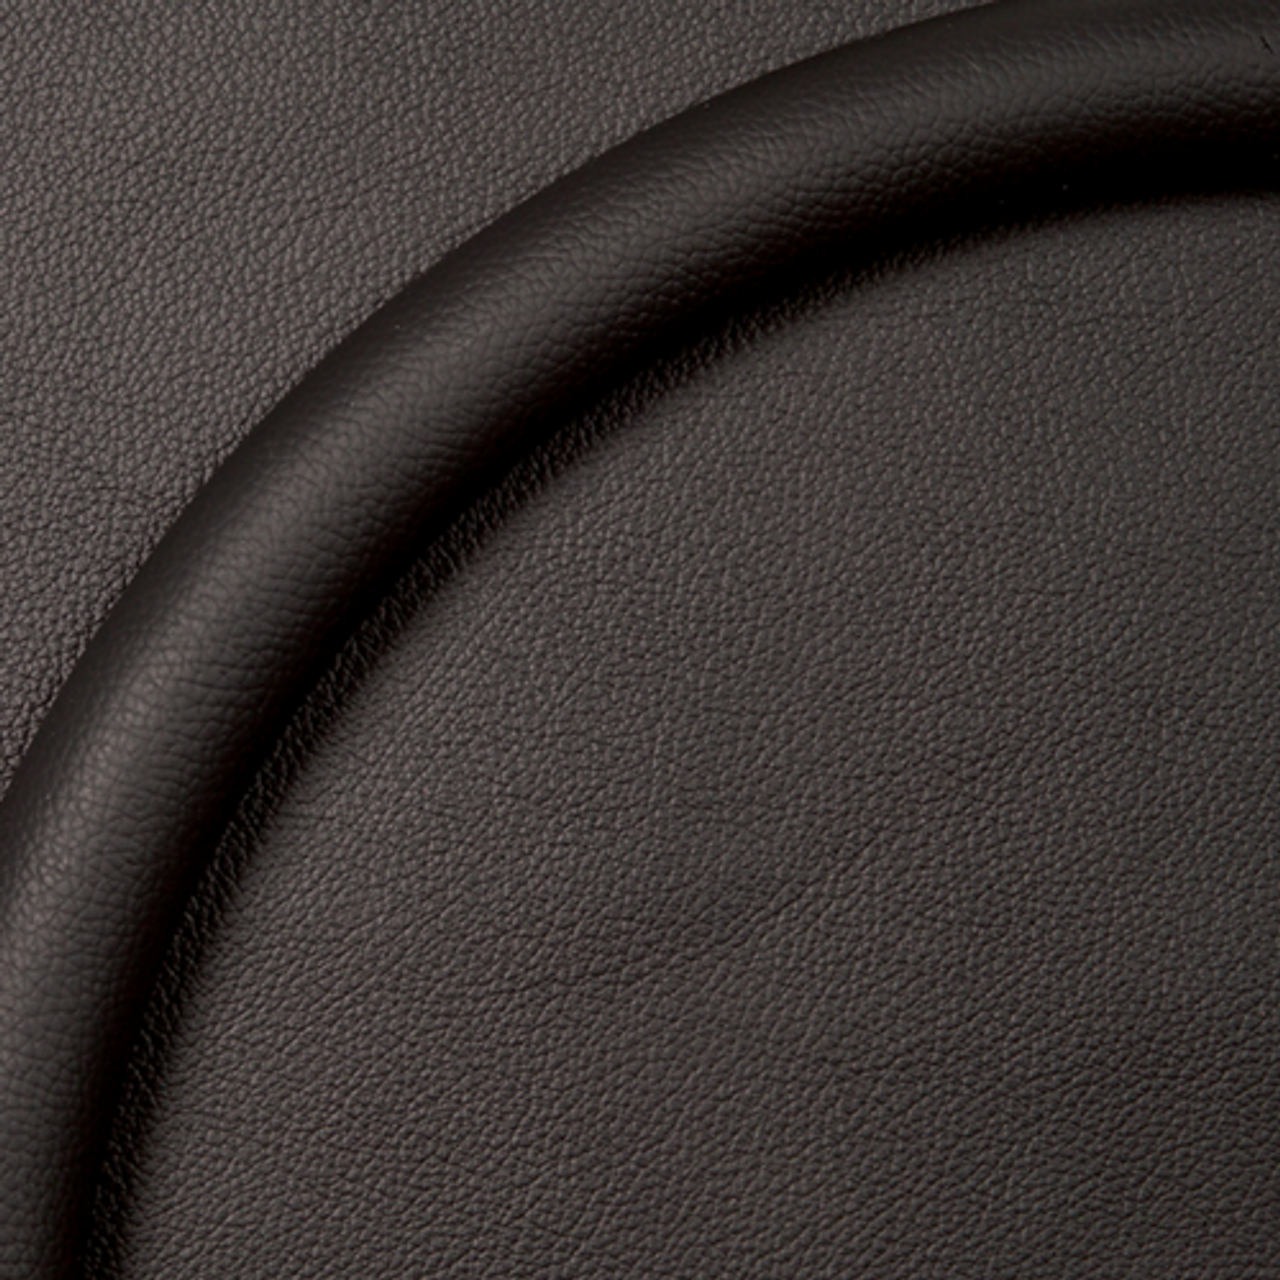 Billet Specialties Half-Wrap Ring - 14", Black Leather